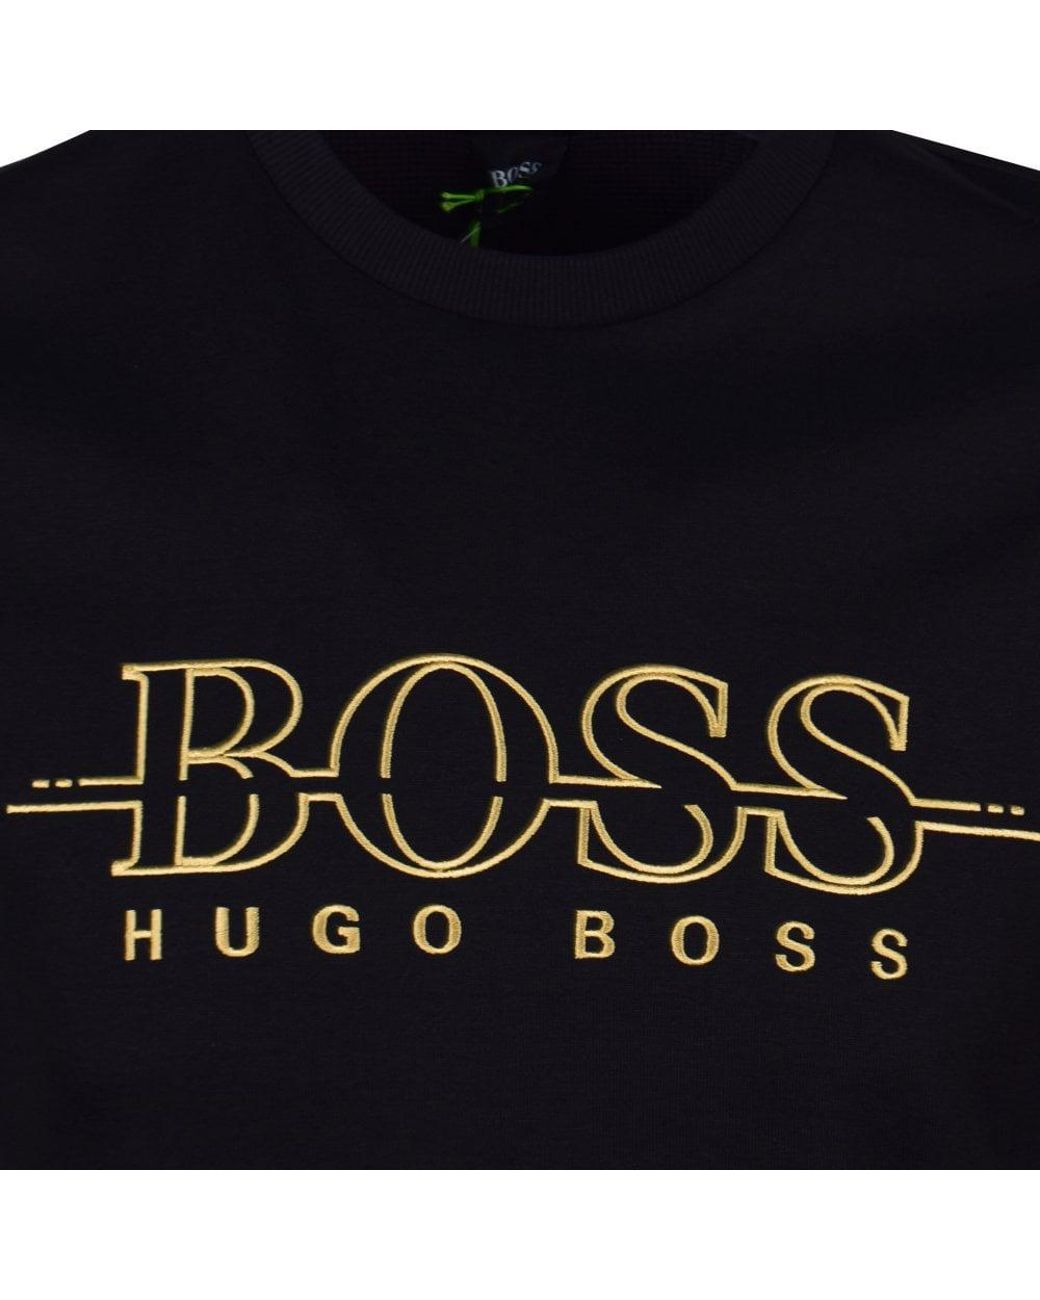 BOSS by HUGO BOSS Black/gold Logo Sweatshirt for Men | Lyst